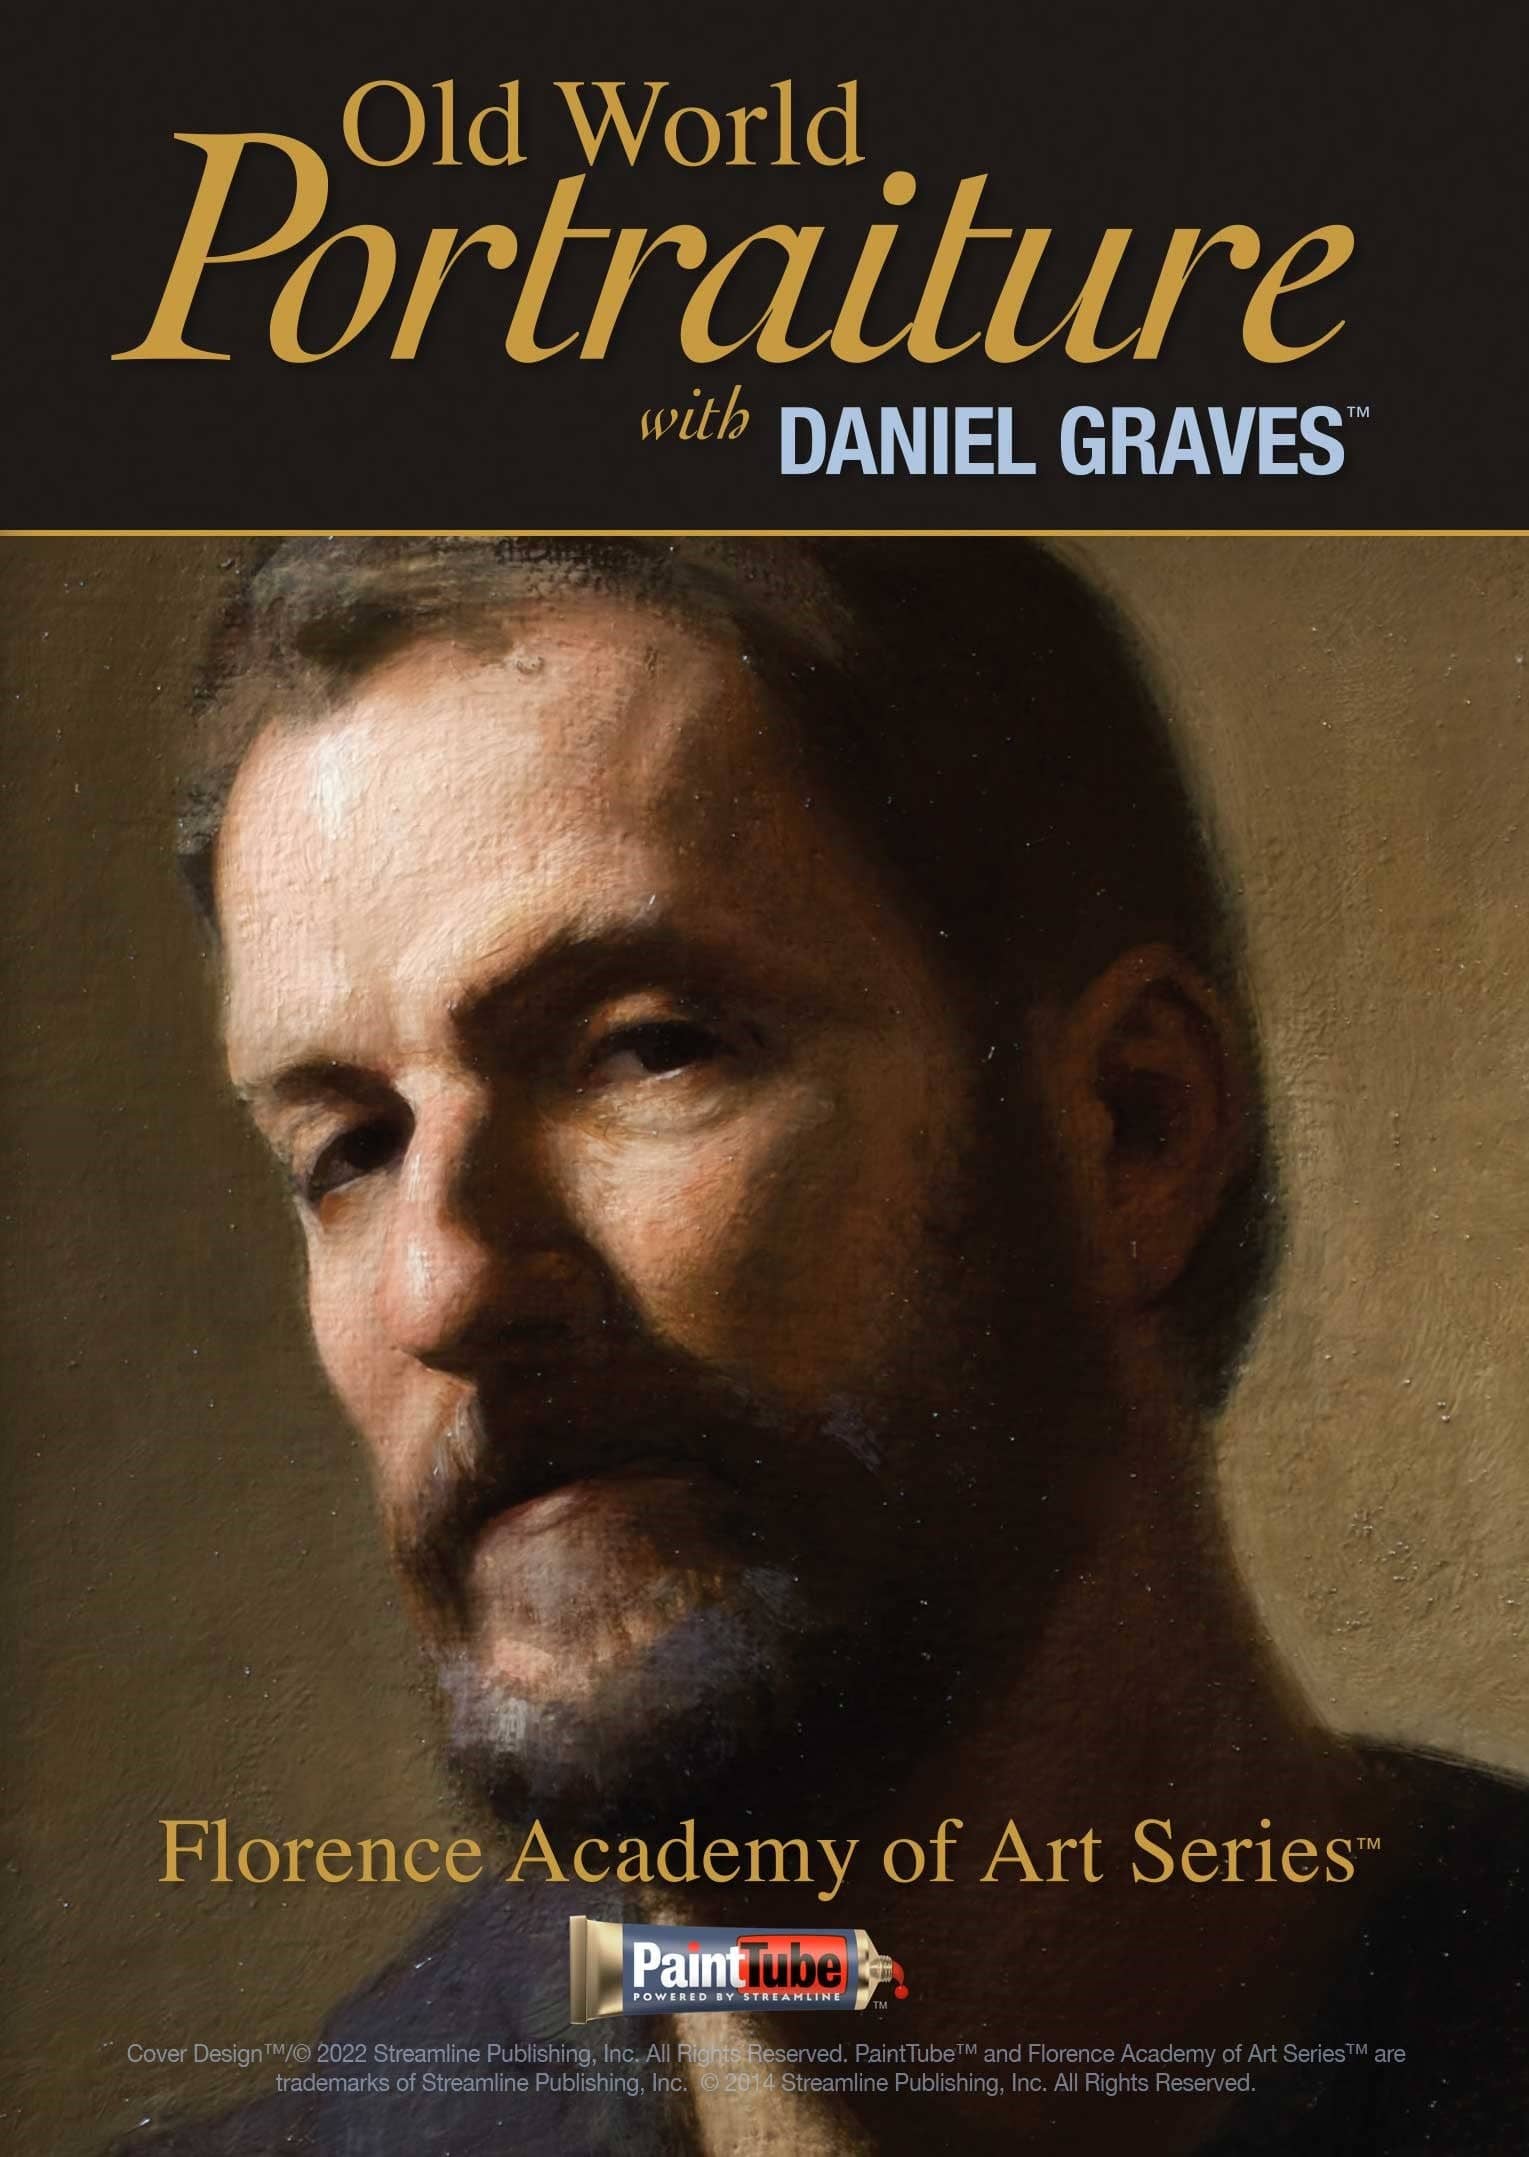 Daniel Graves: Old World Portraiture